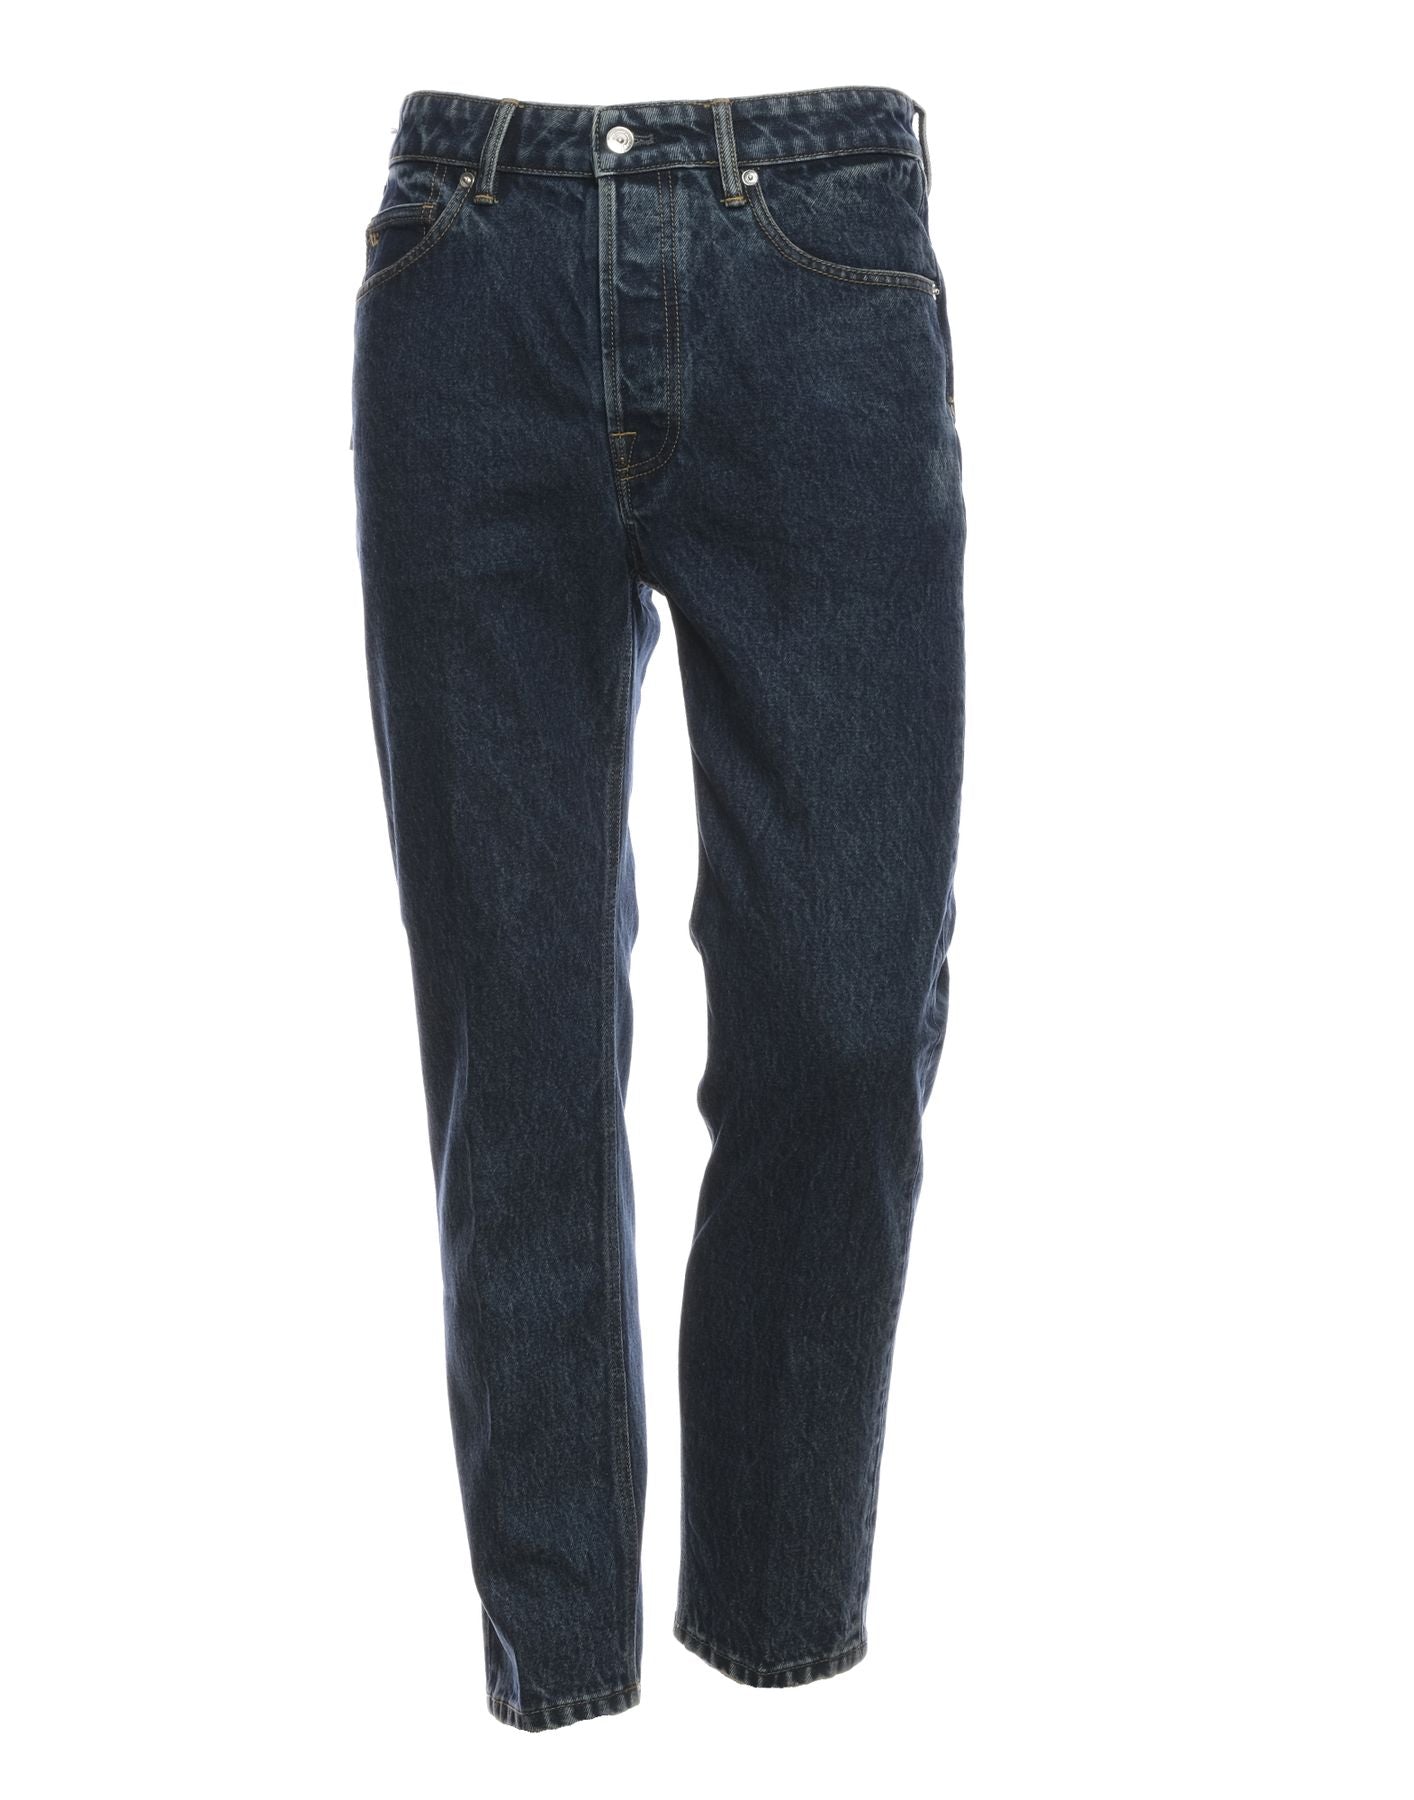 Jeans für Männer Nolan Nol01 AZ18 NINE:INTHE:MORNING